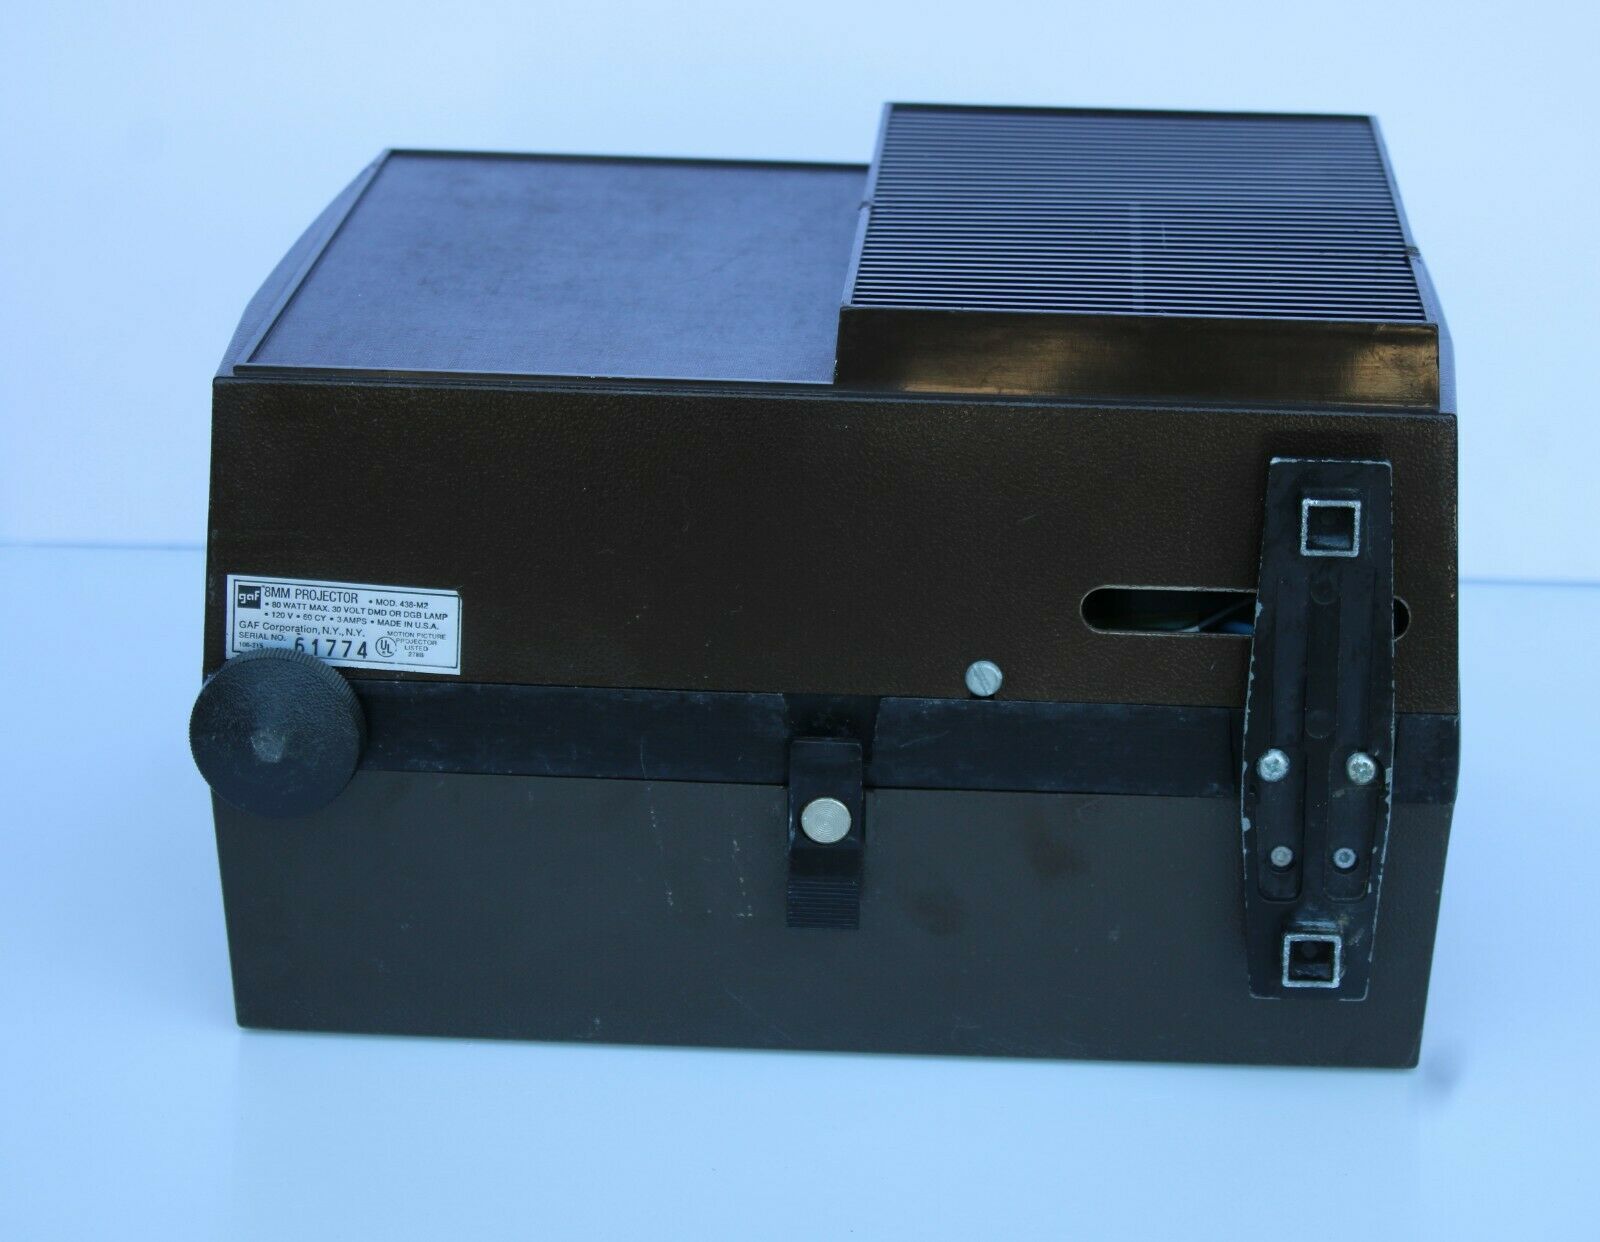 GAF DUAL Super 8MM & 8MM Movie Projector (Type II)